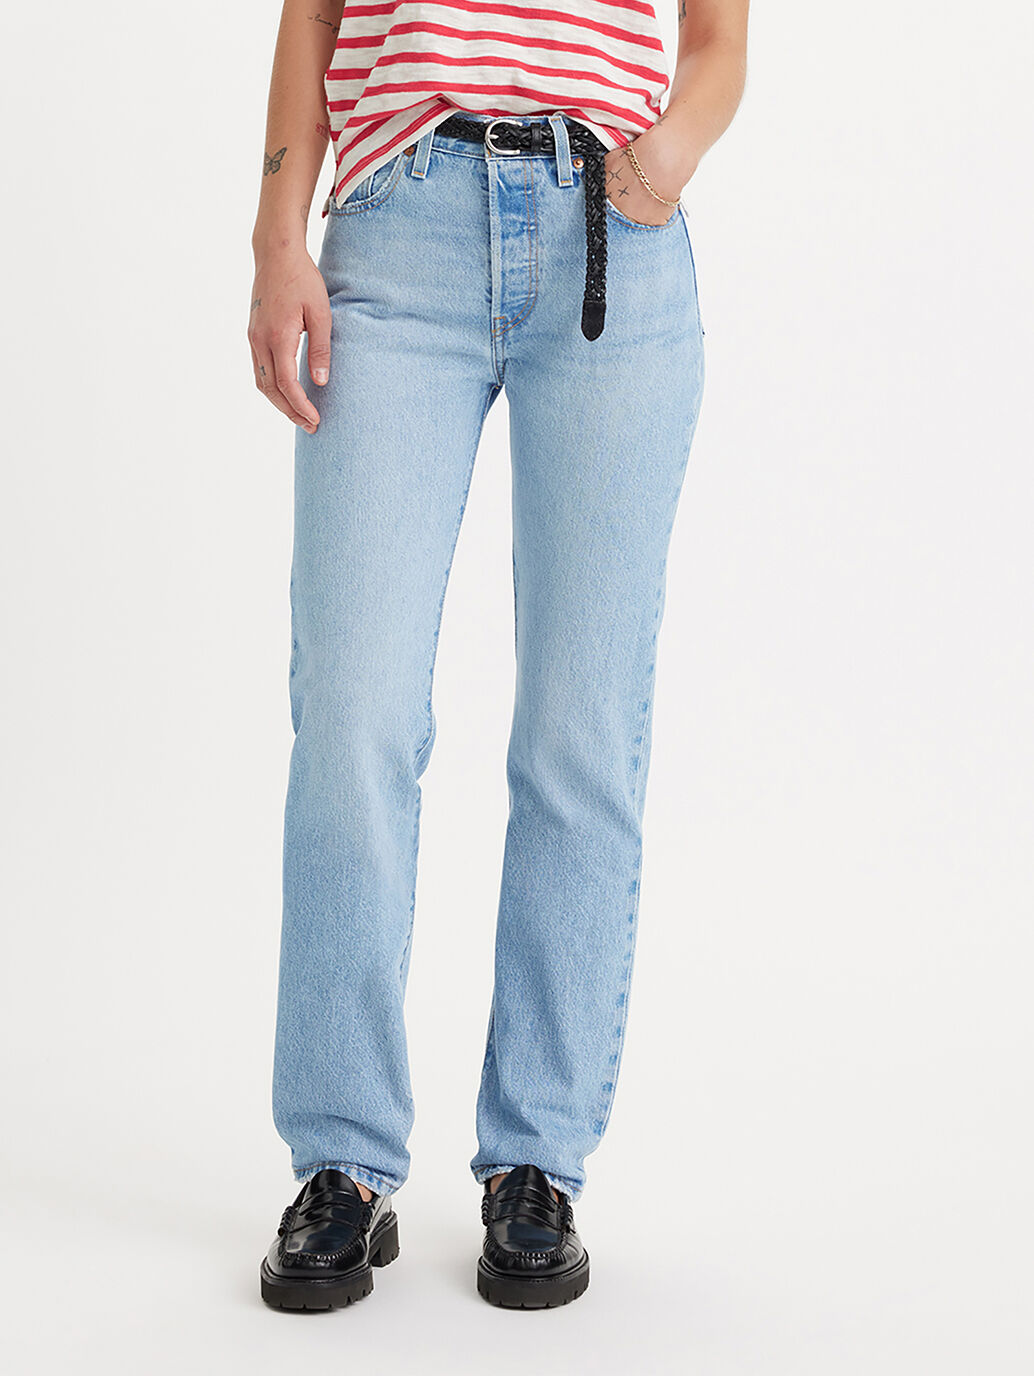 Women's Levi's 501 Original Straight Jeans